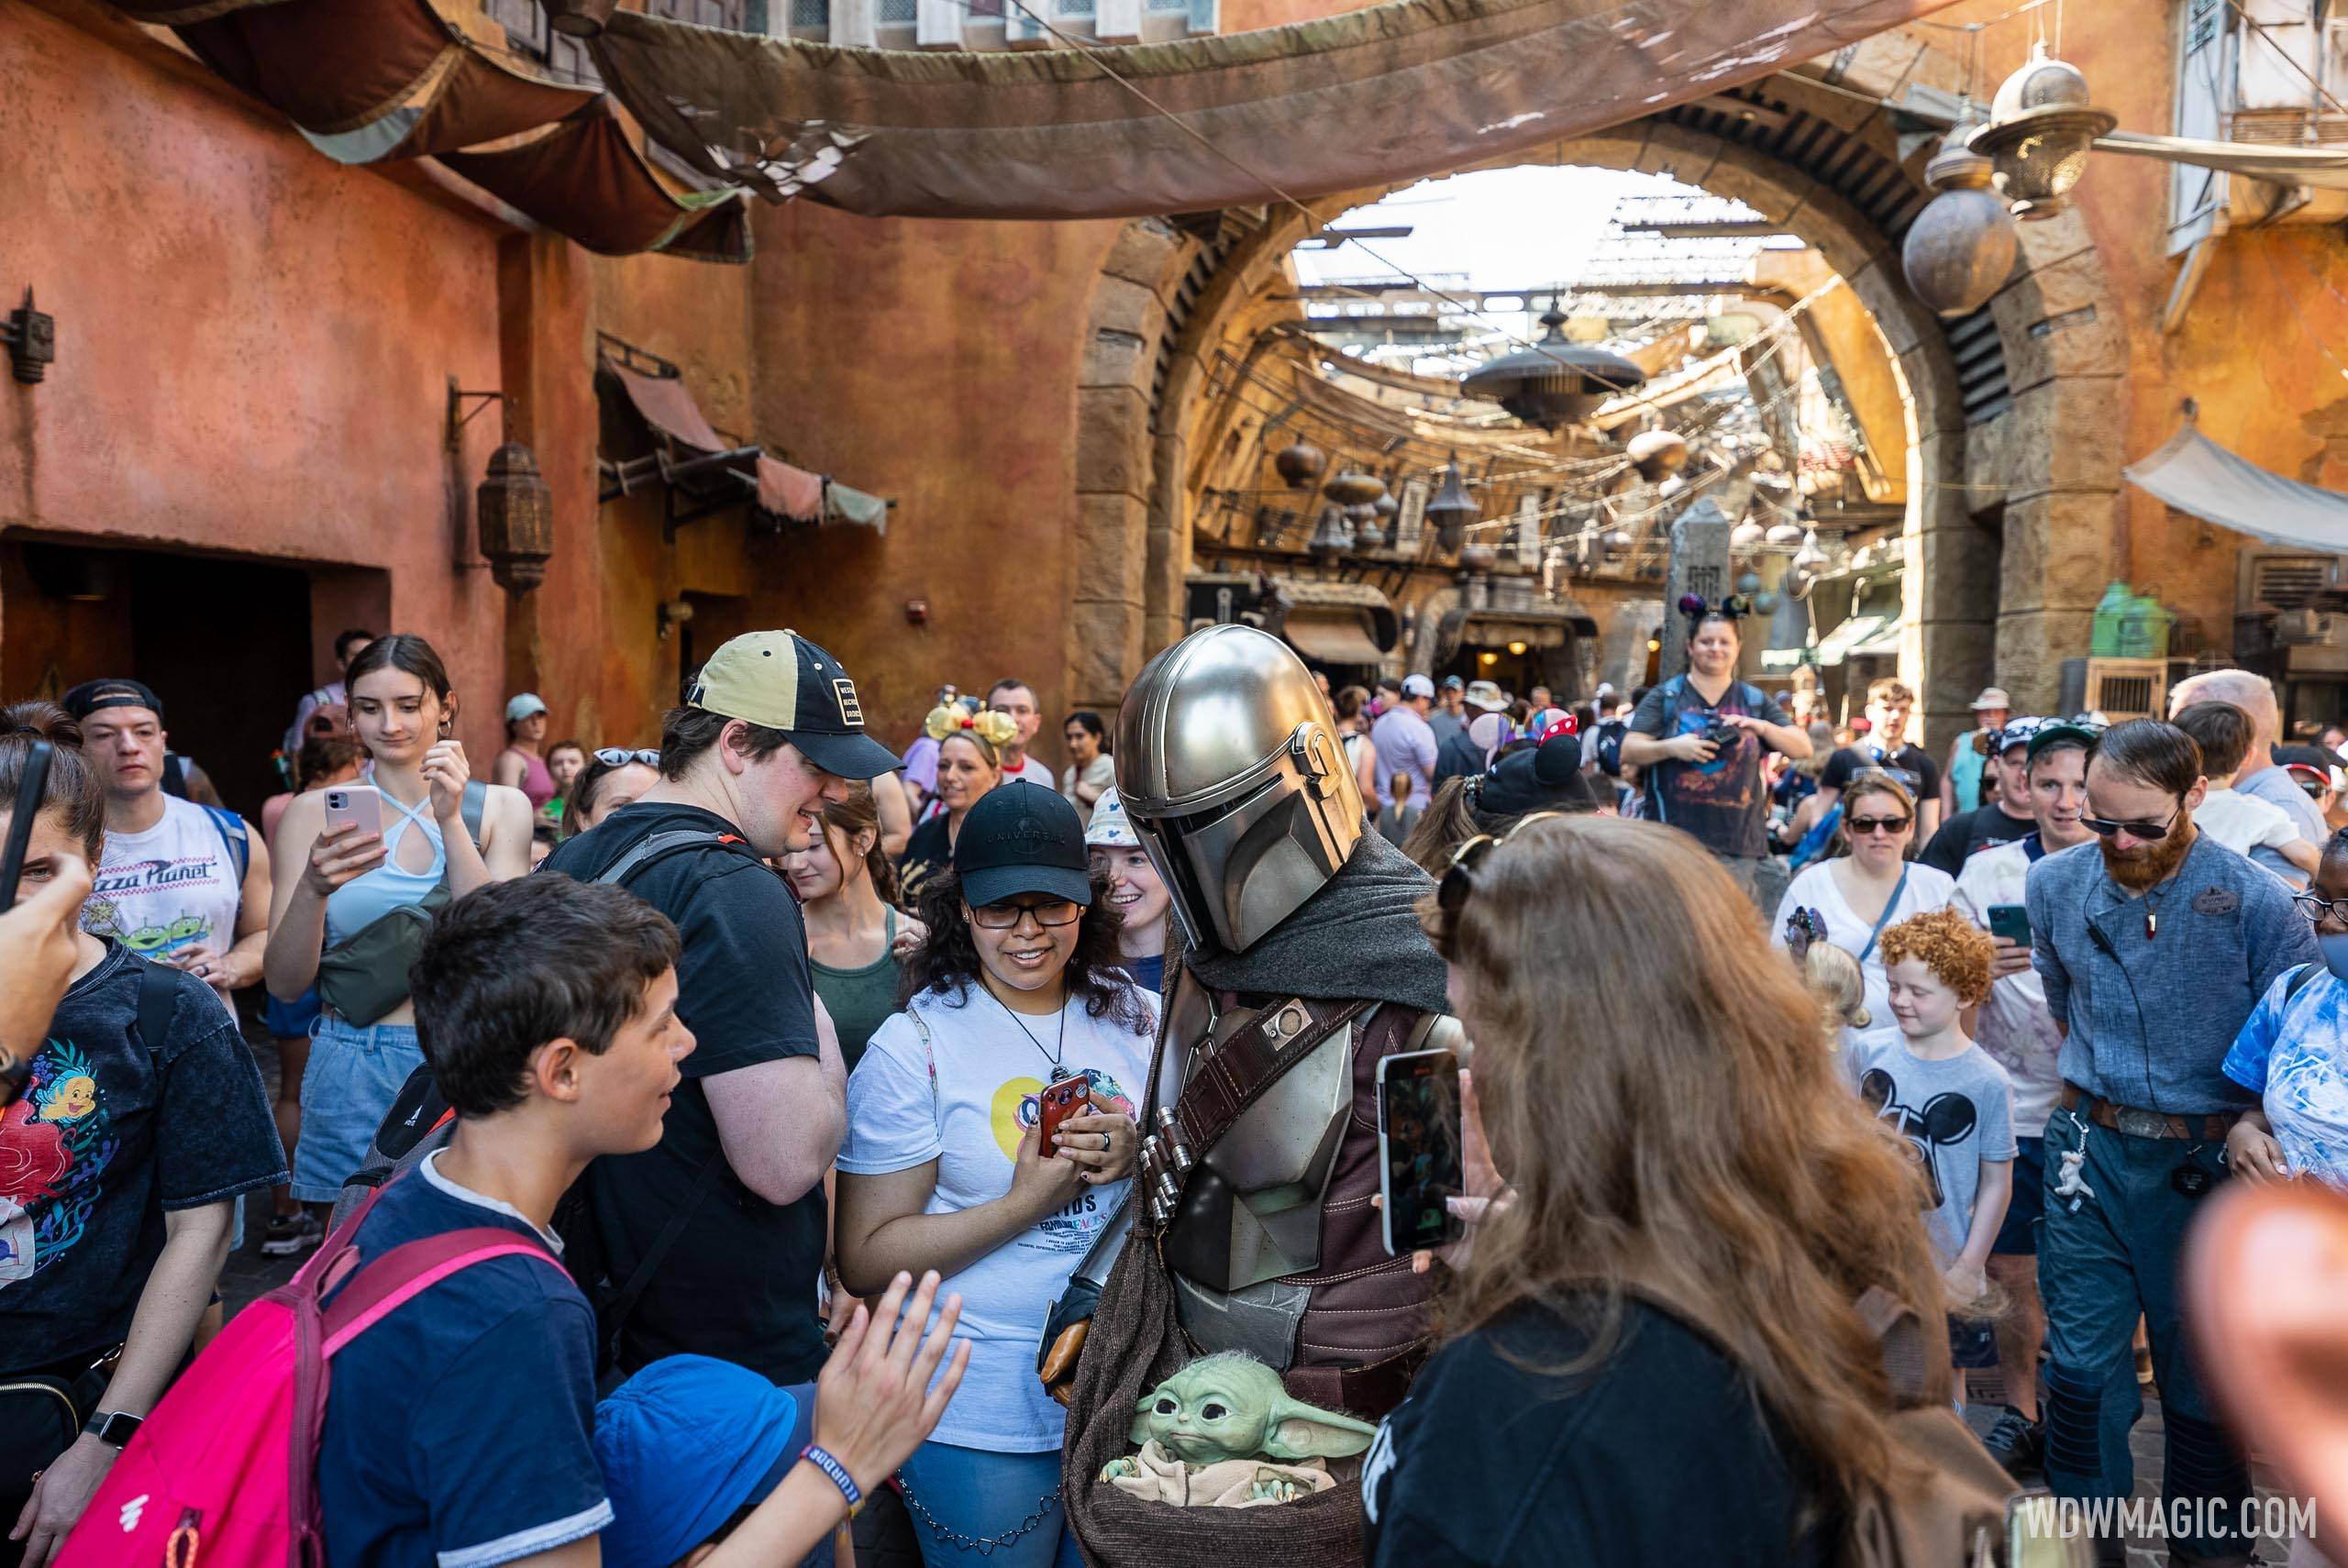 The Mandalorian and Grogu meet and greet at Disney's Hollywood Studios